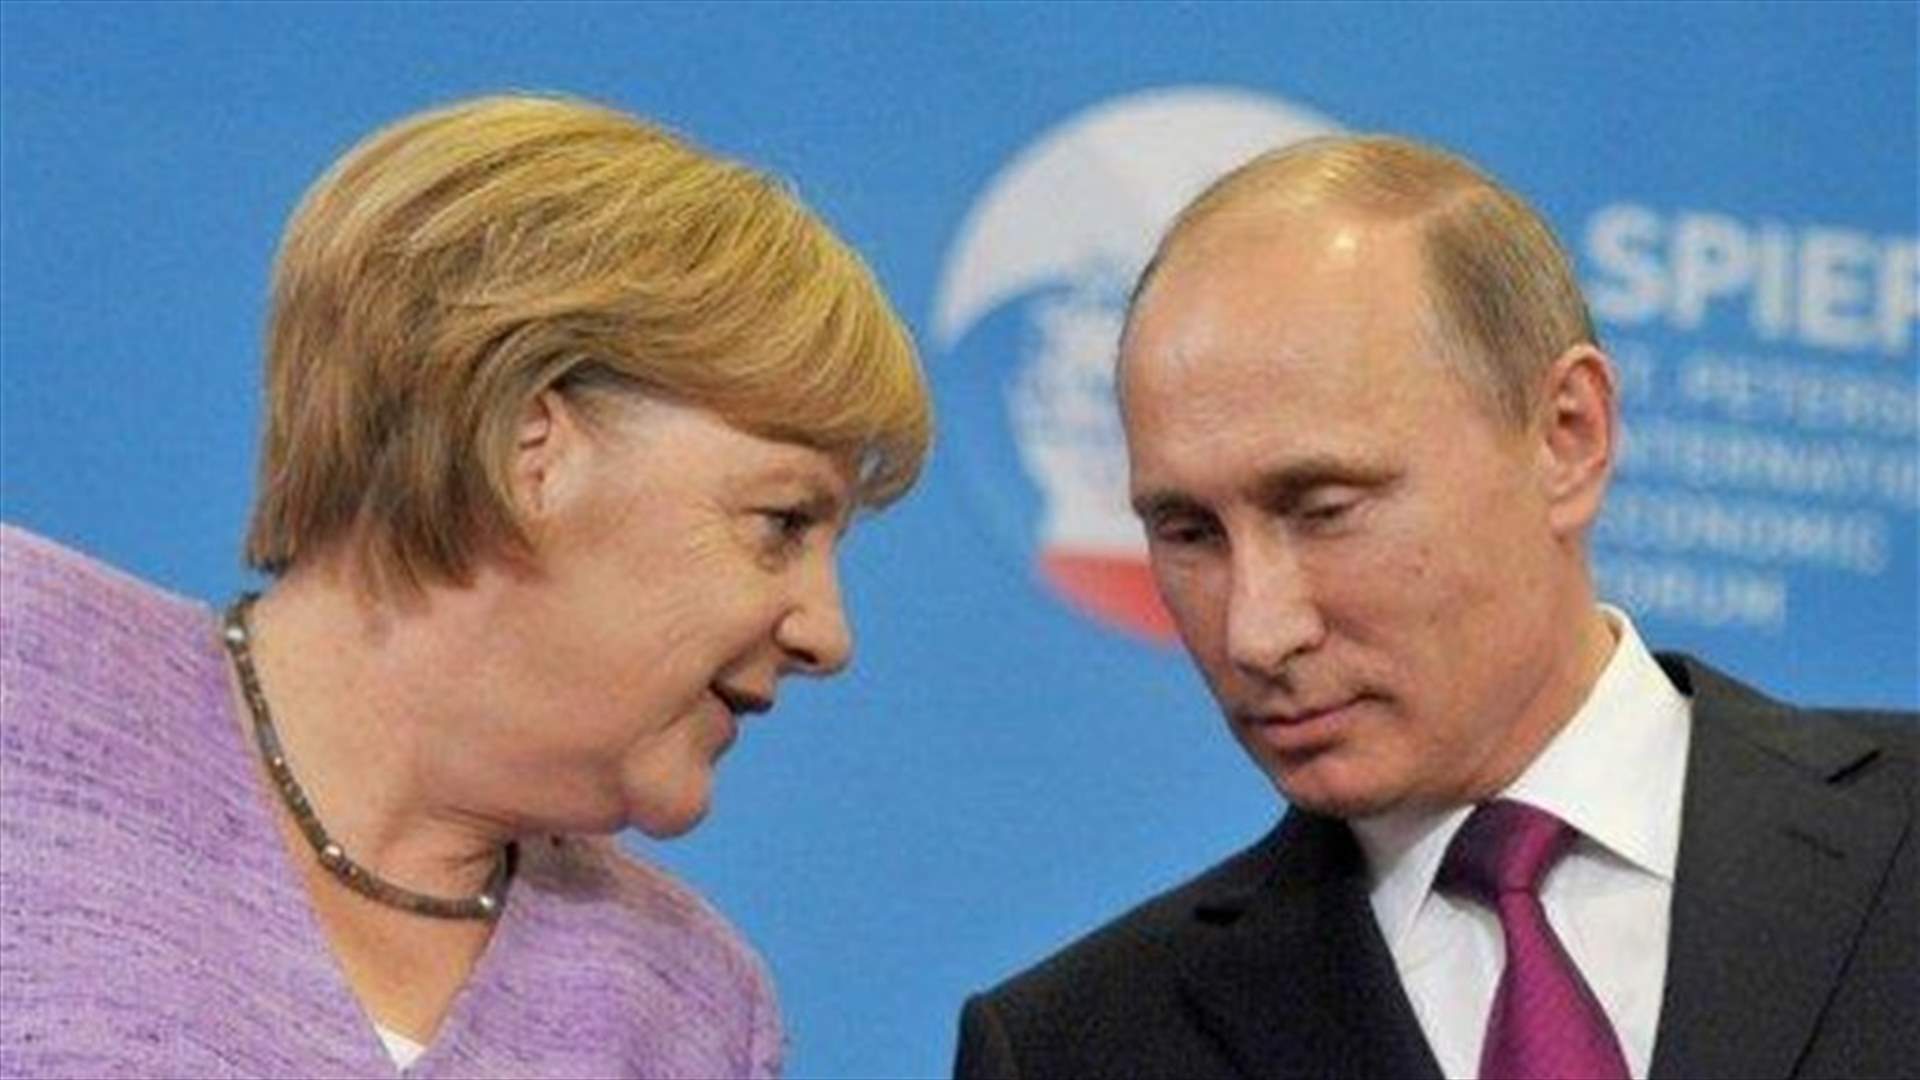 Putin, Merkel hold phone call after German polls - Kremlin